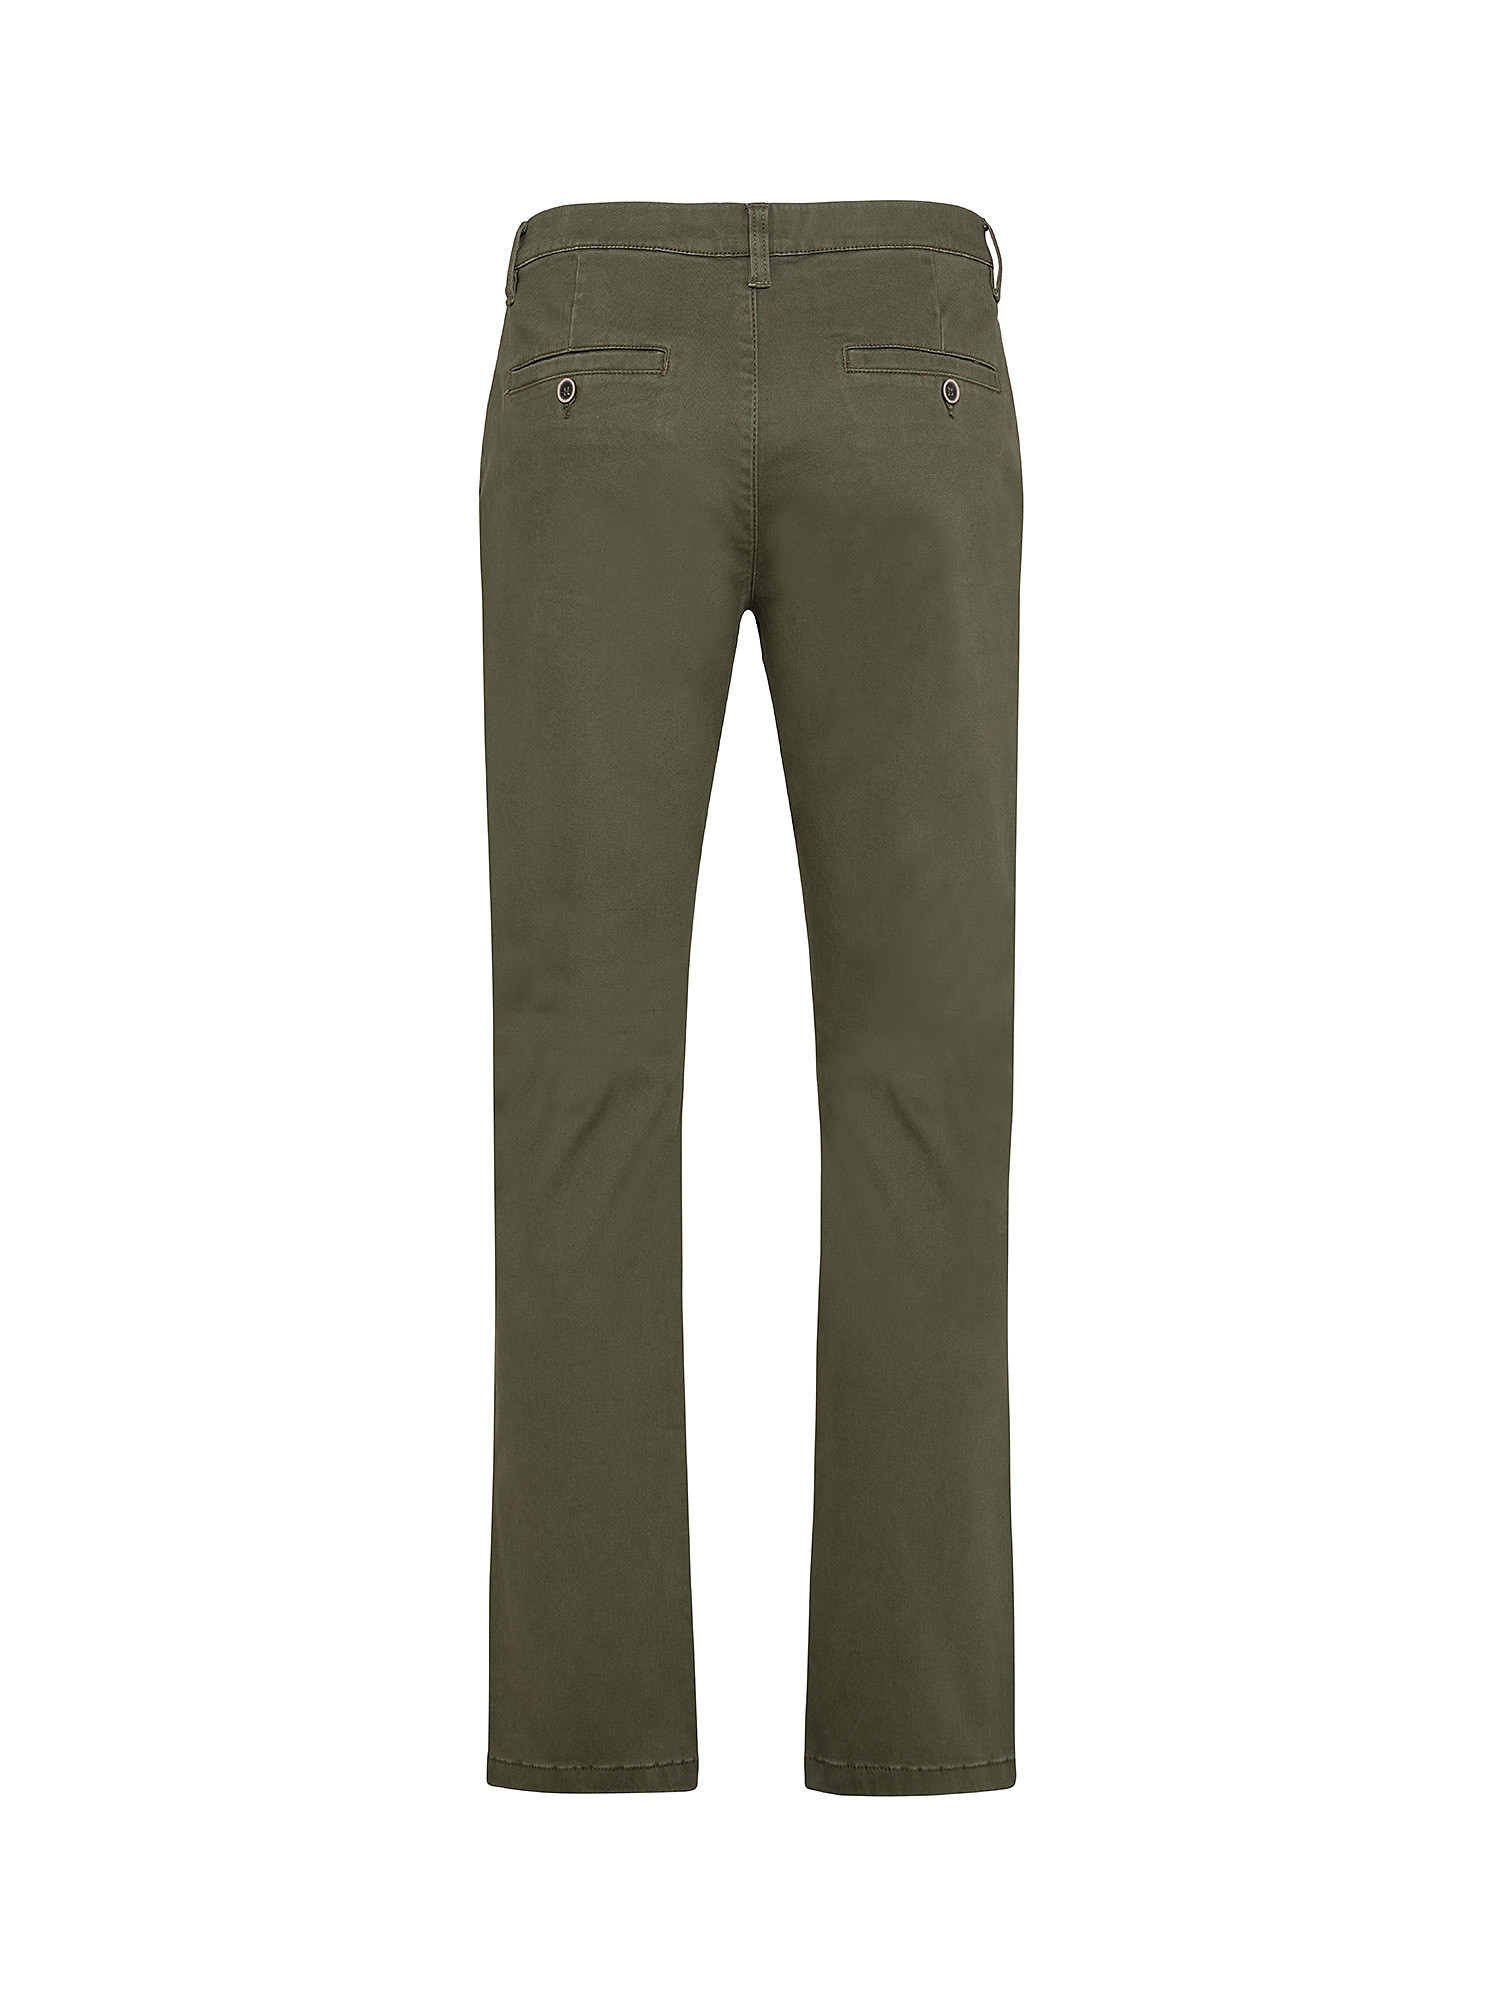 Pantalone slim comfort fit in cotone elasticizzato, Verde oliva, large image number 1